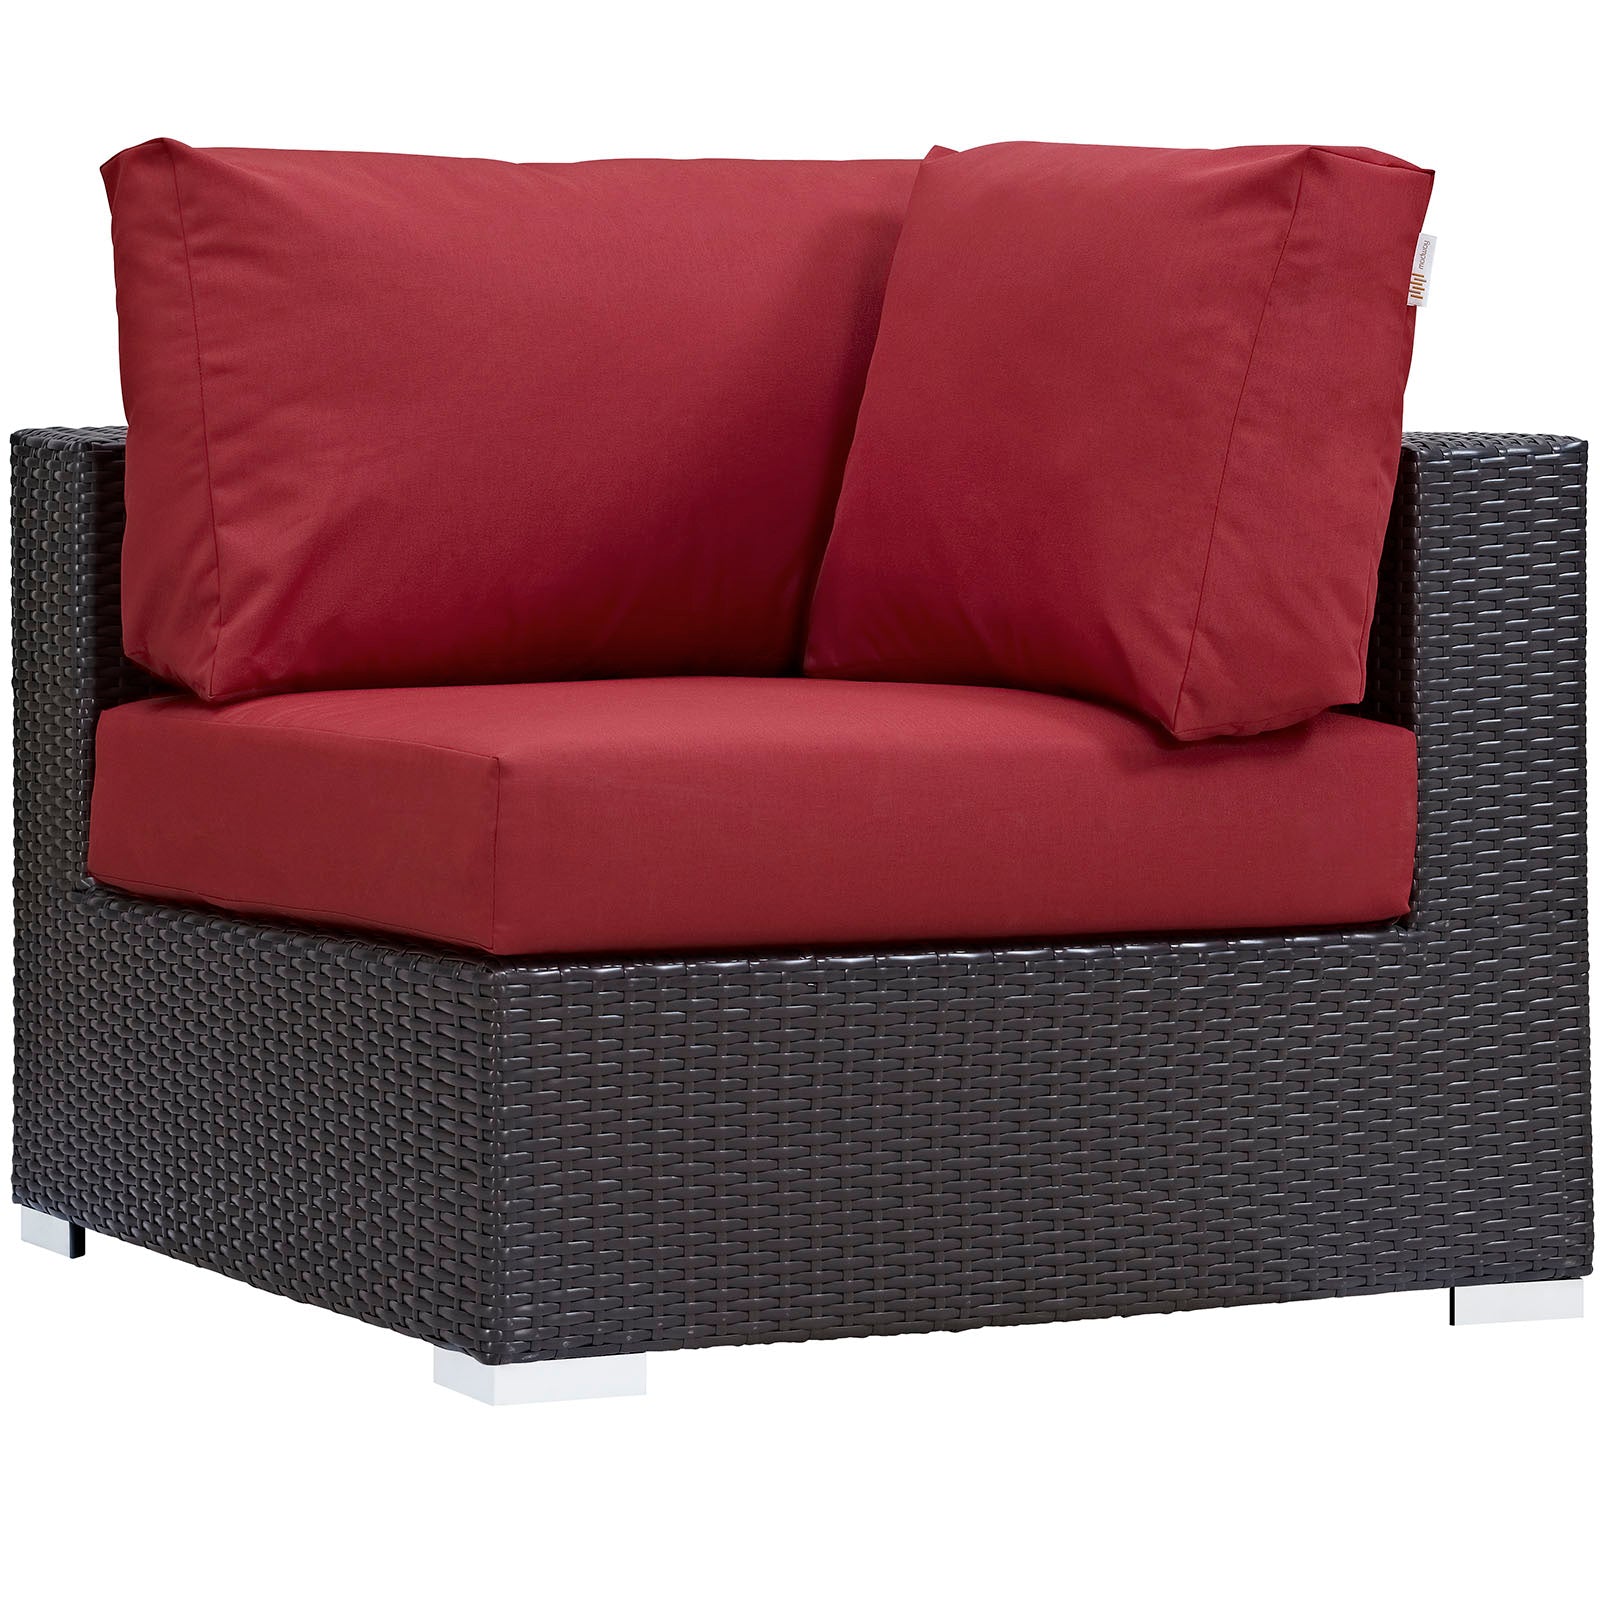 Modway Outdoor Chairs - Convene Outdoor Patio Corner Espresso Red